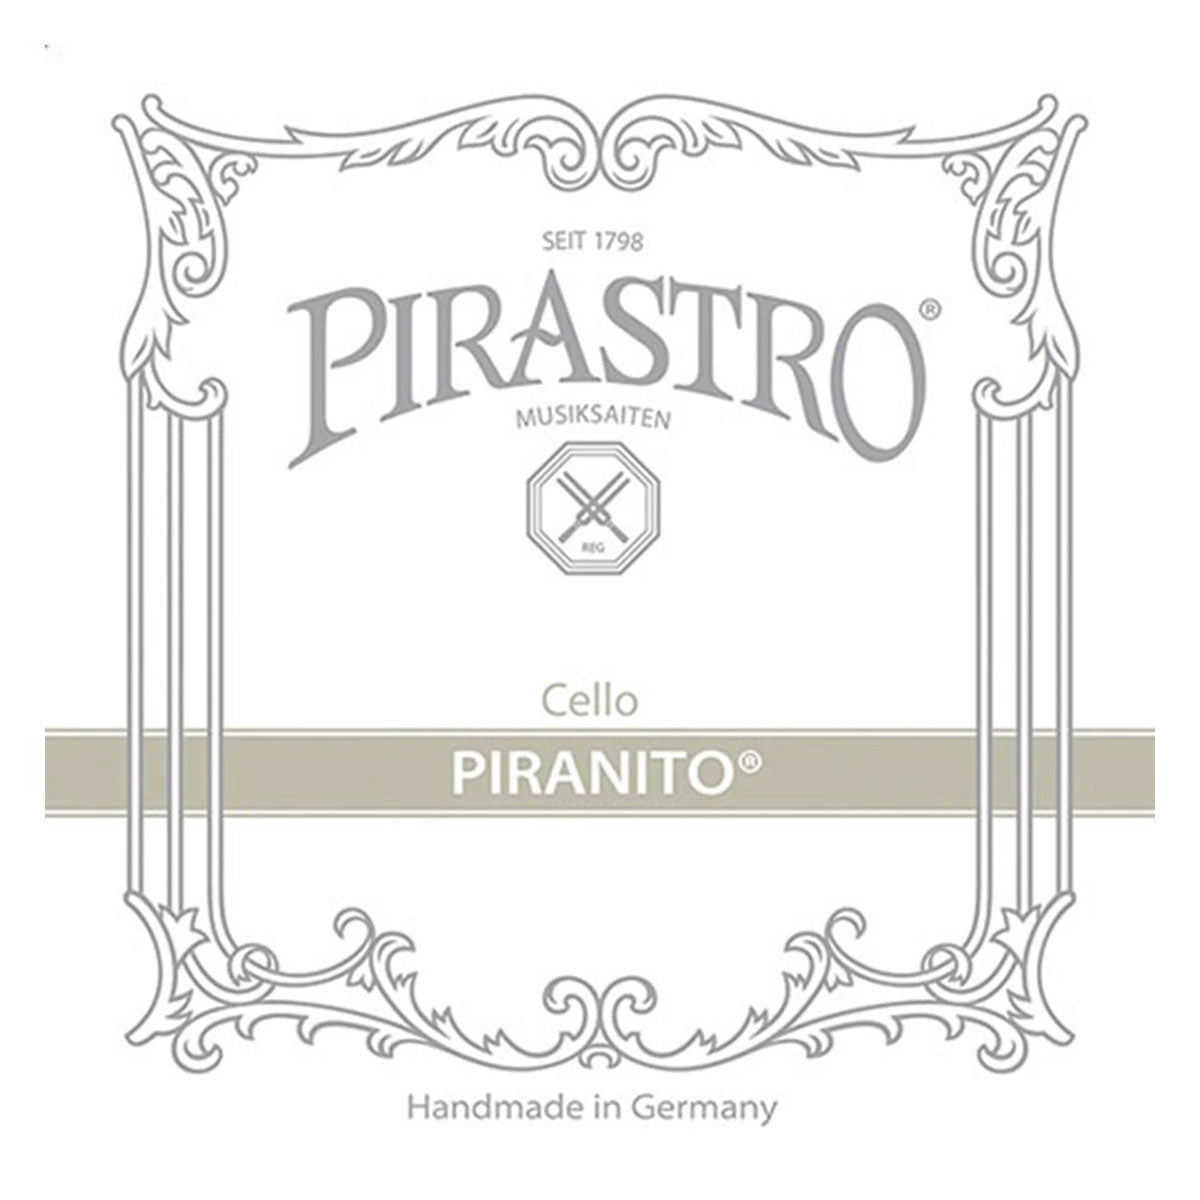 Pirastro PI6350.00 Pirantino Cello String Set